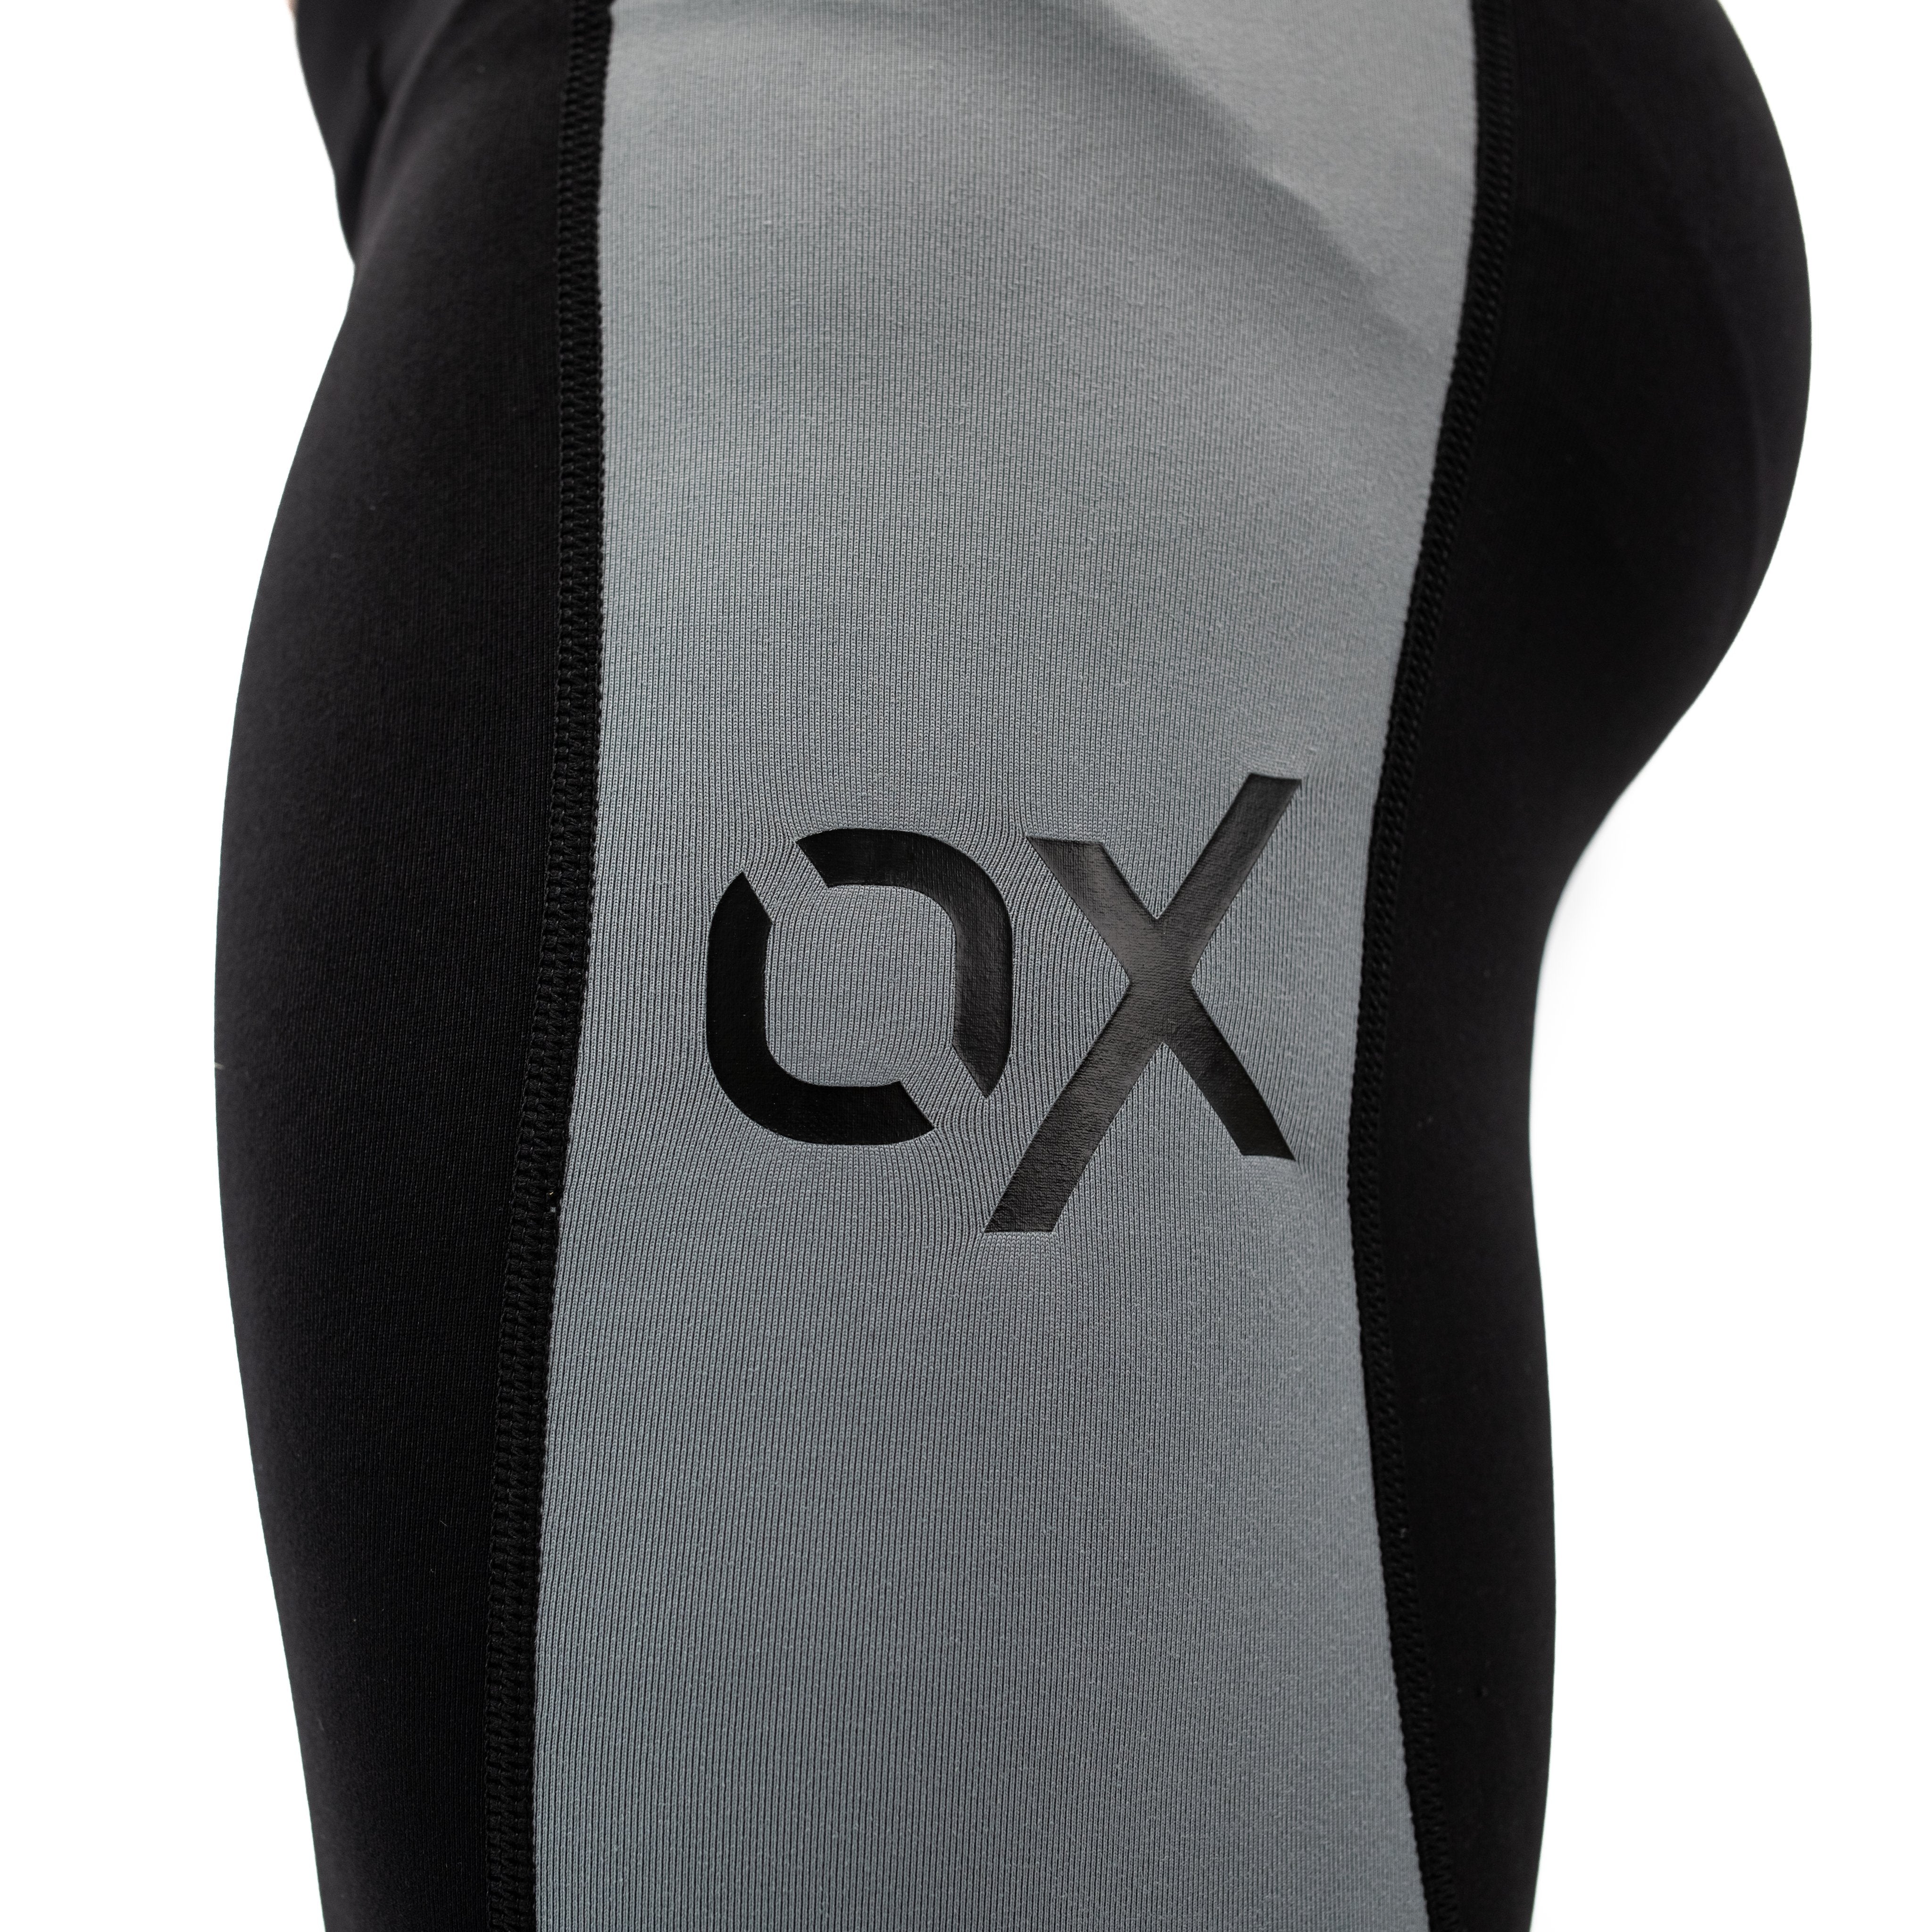 Ox Men's Compression Pants - Stealth